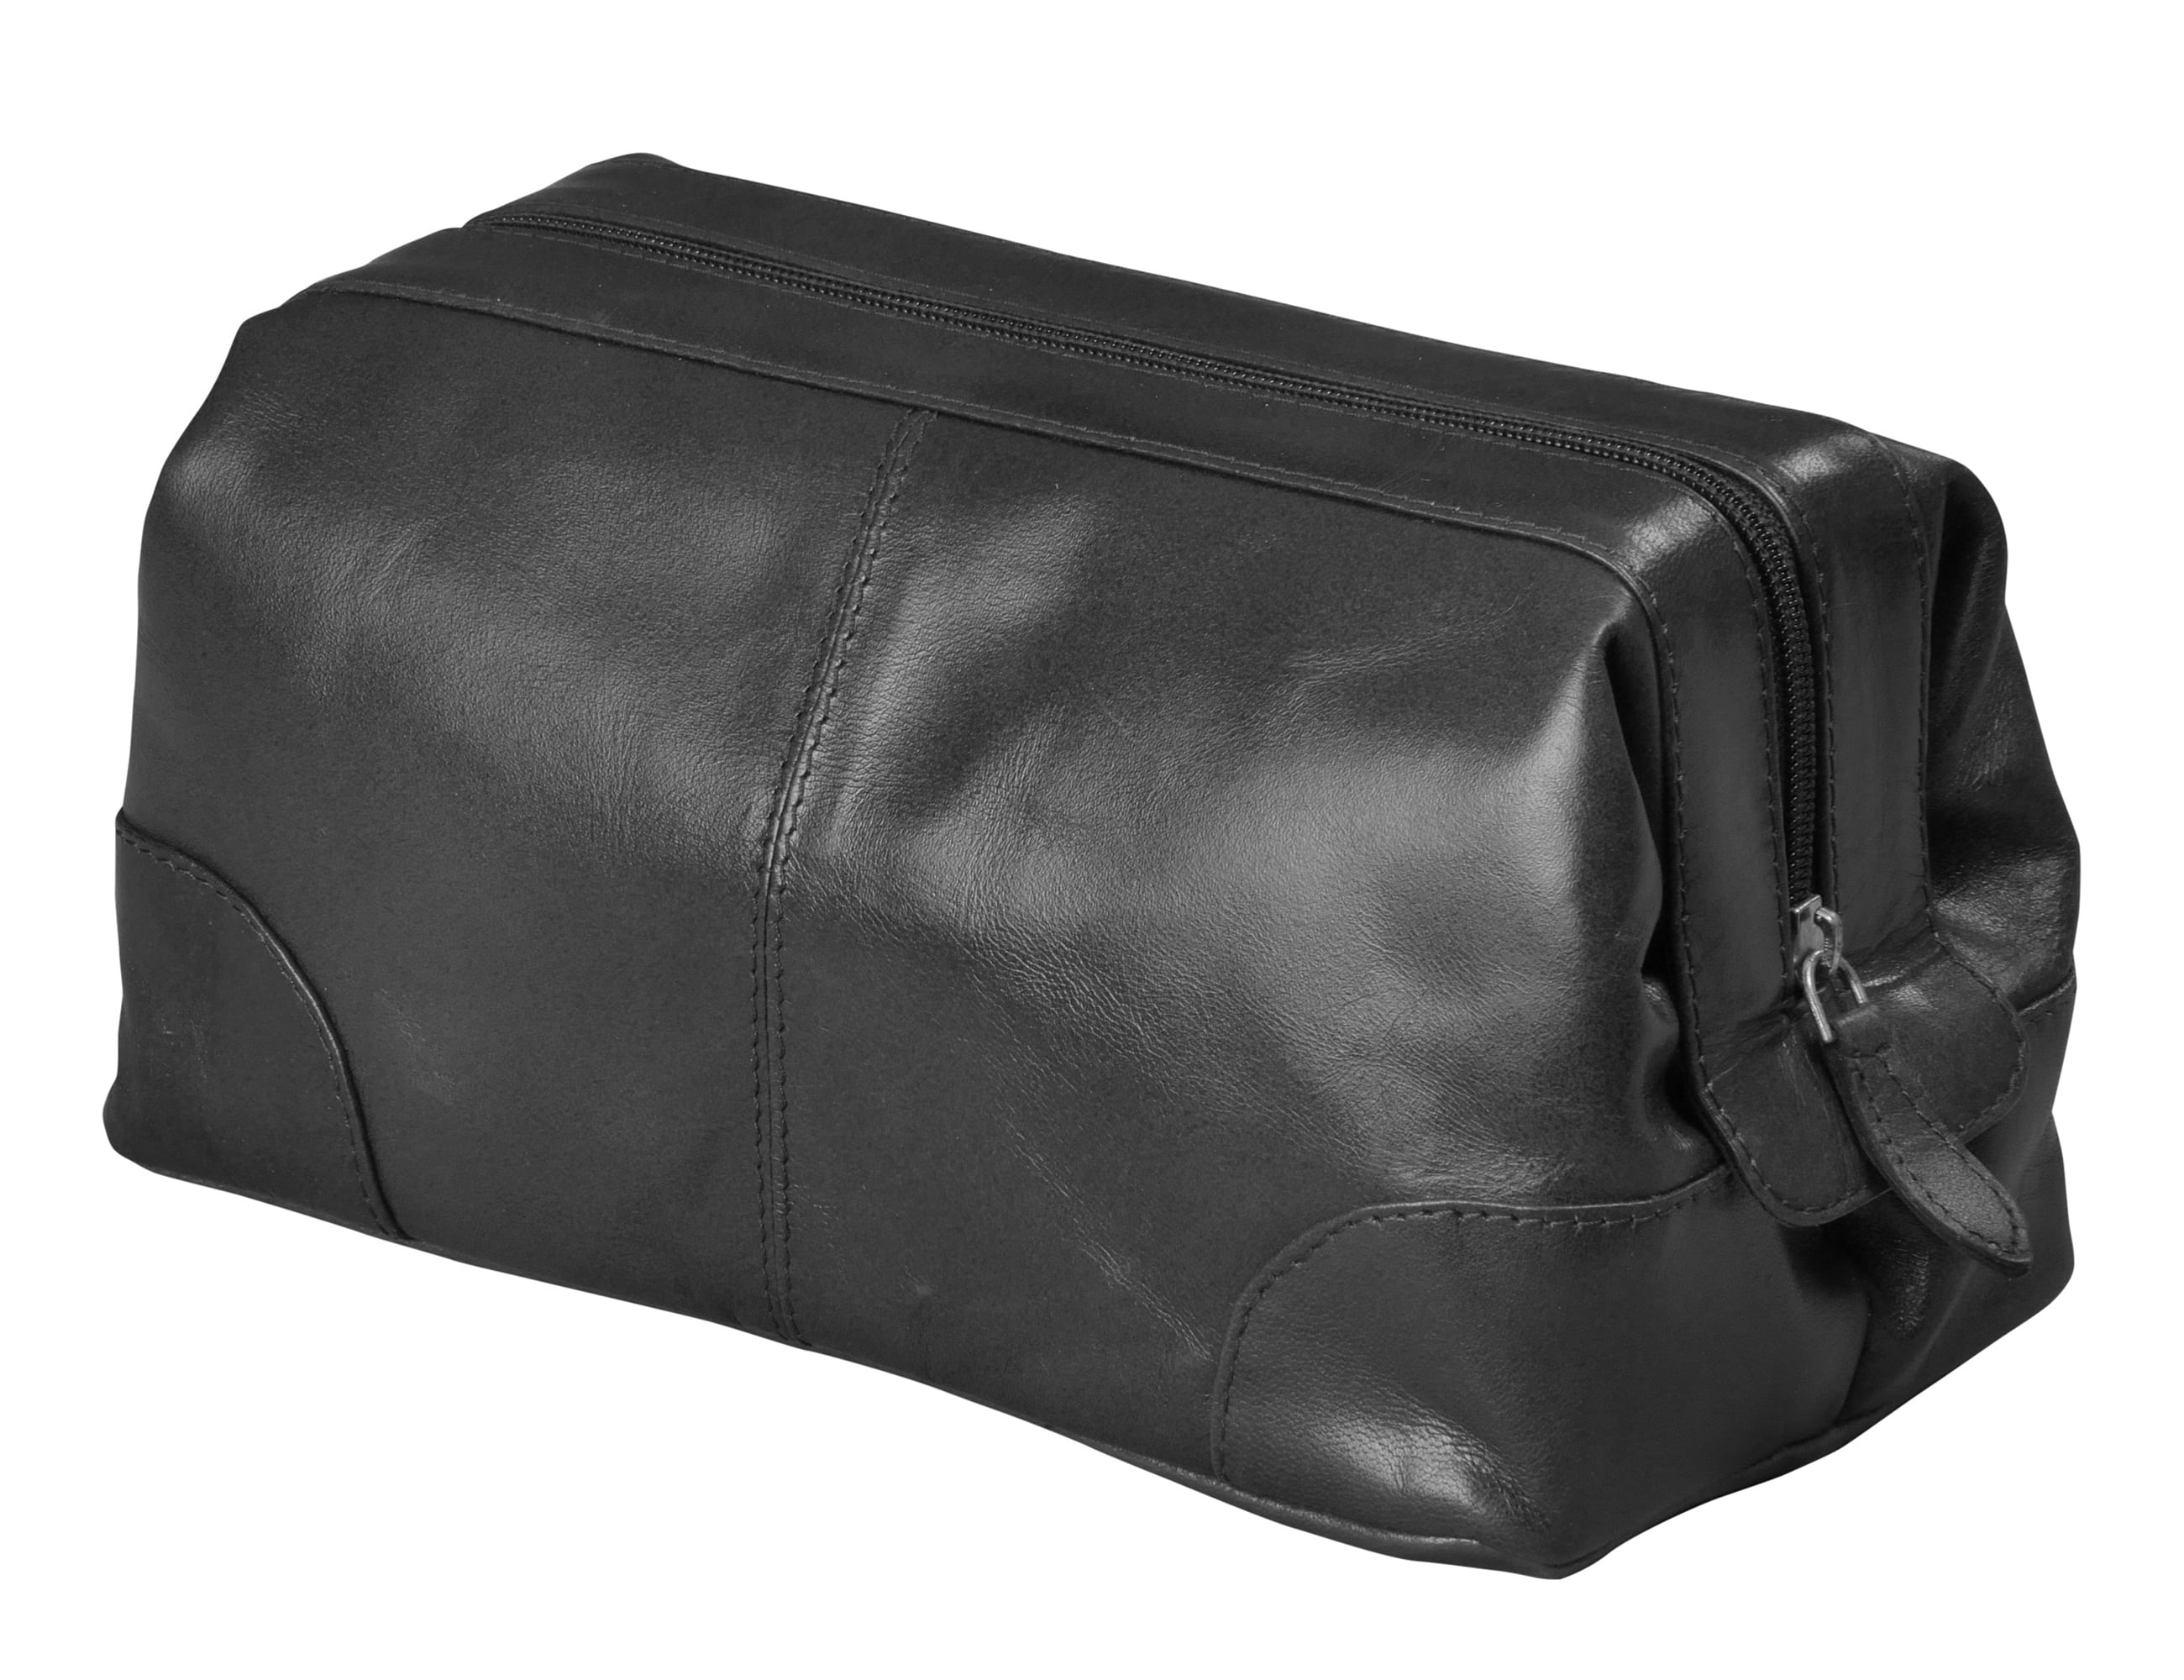 Mens Toiletry Bag Dopp Kit by Bayfeild Bags- Small Efficient Minimalist Shave Kit Bag Keeps ...